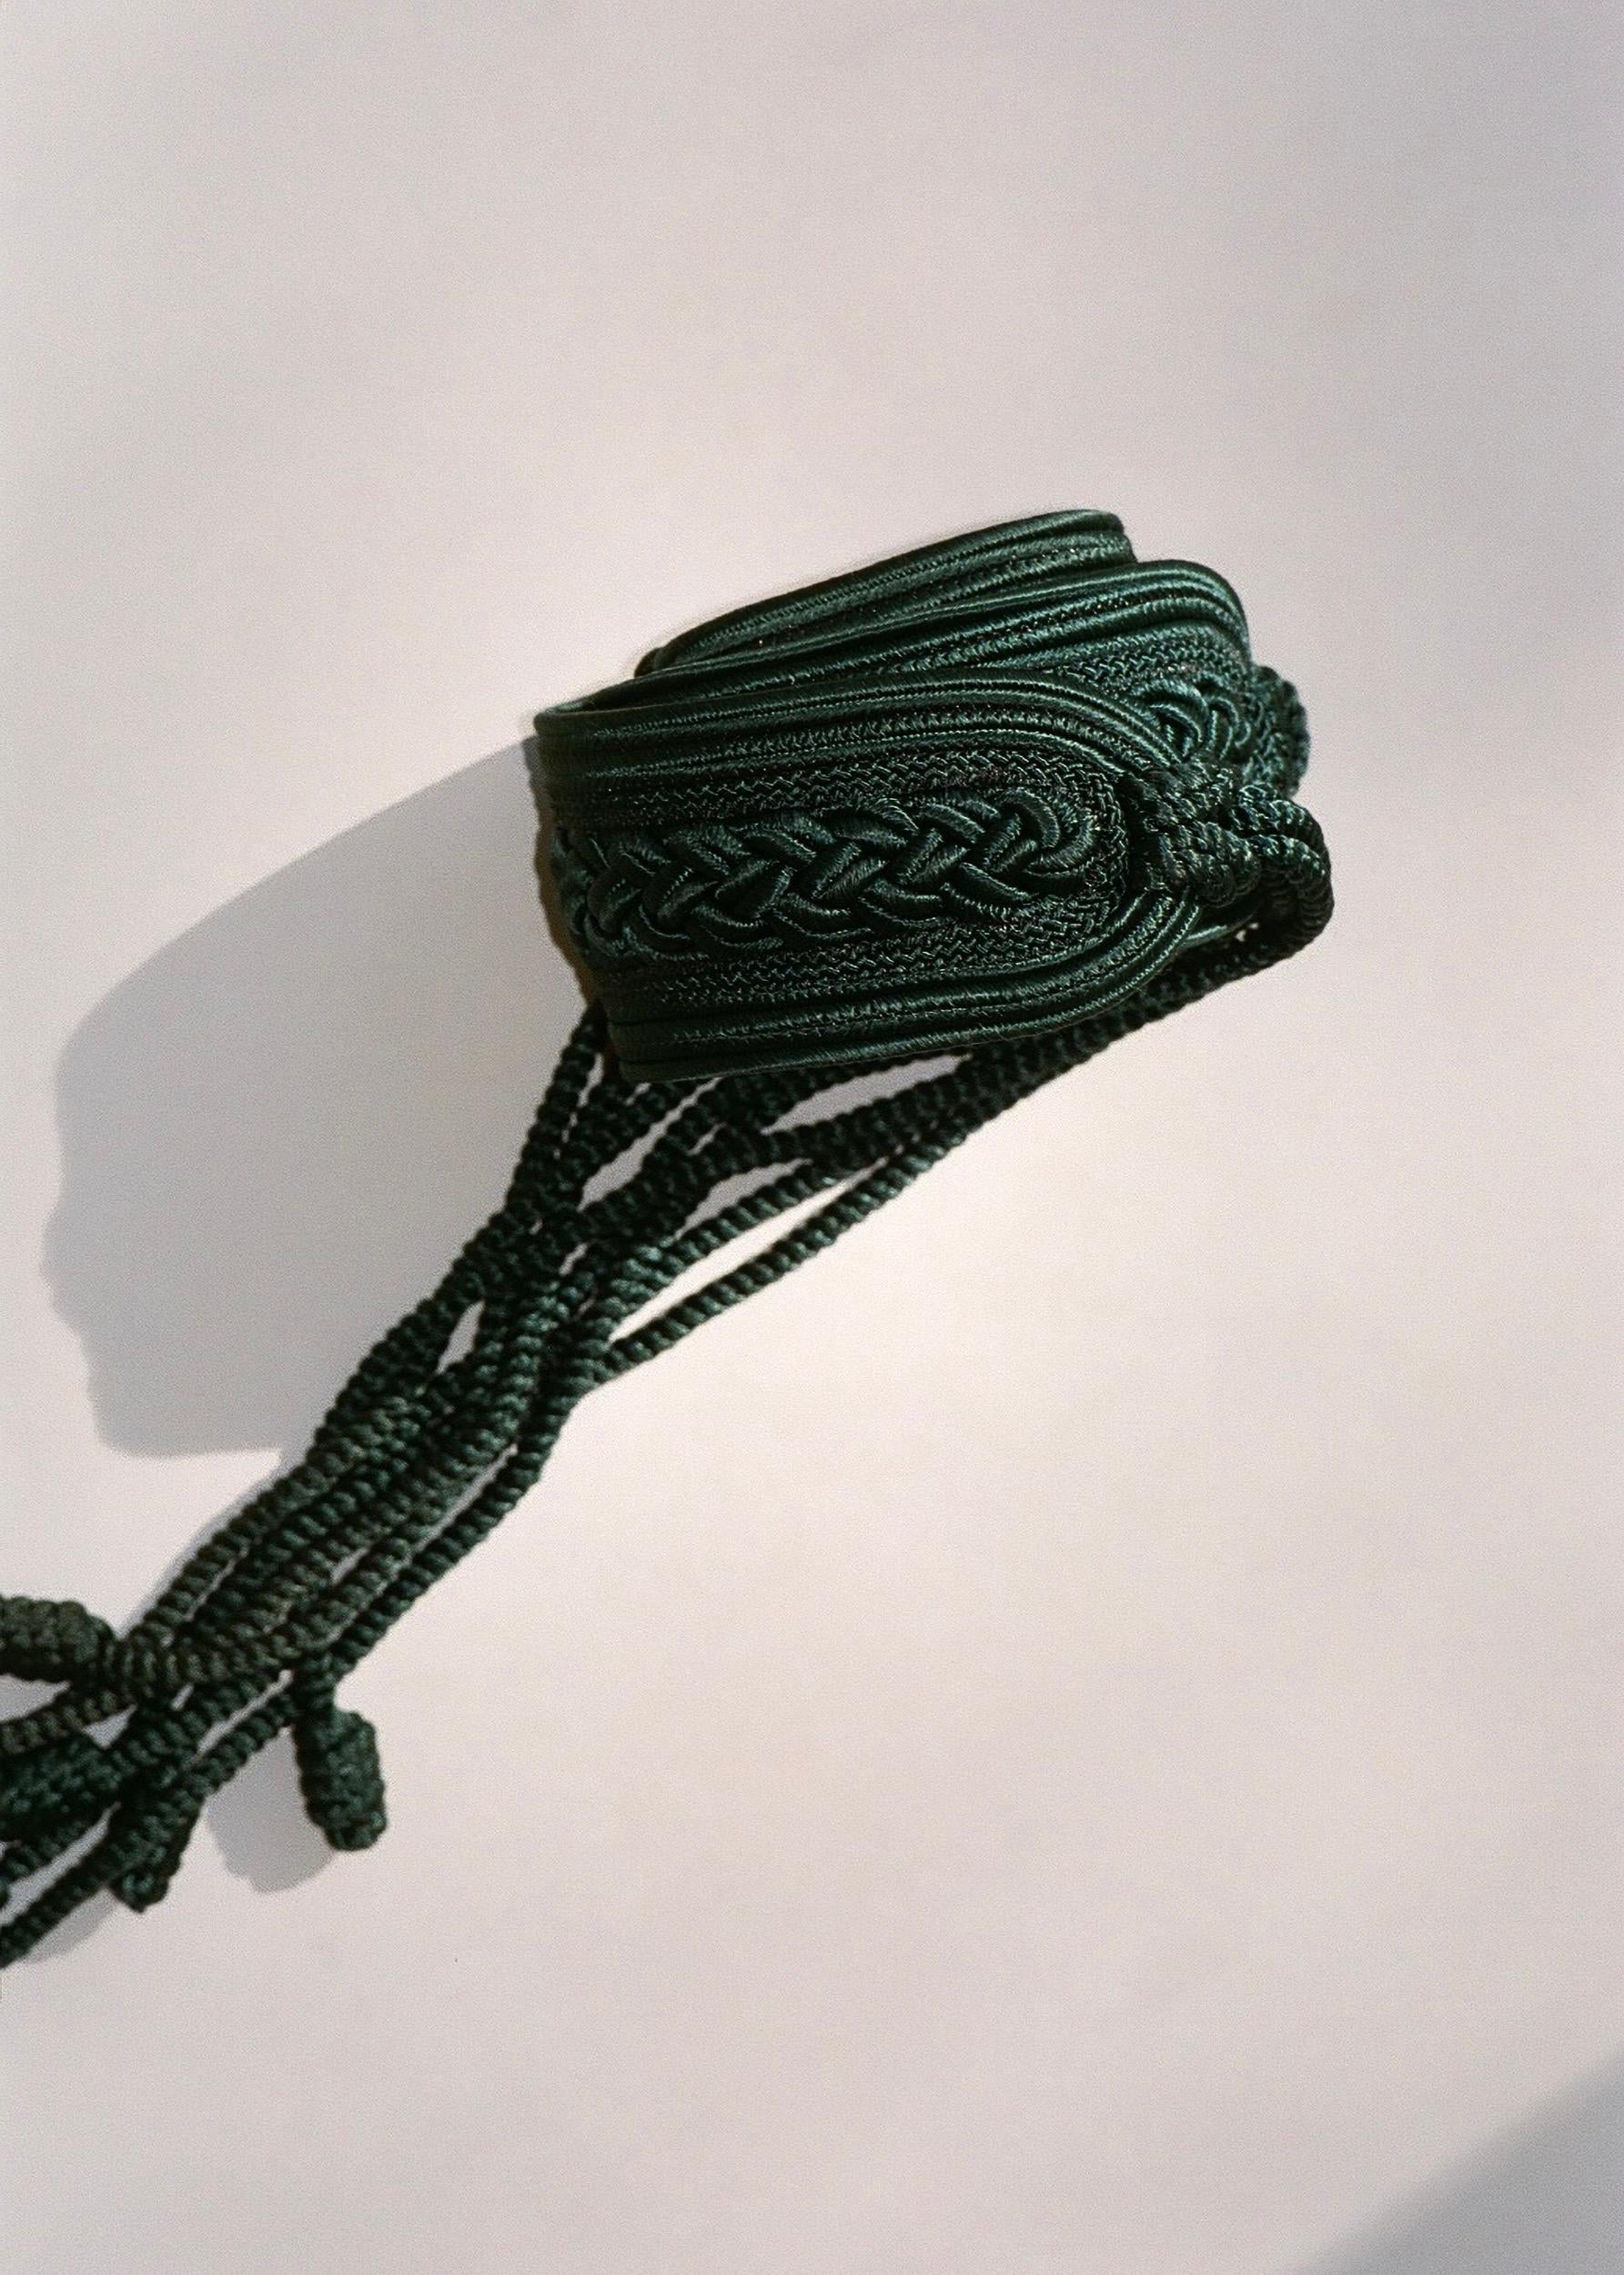 Nina Ricci Passamenterie Belt with Tassels Dark Green 1990's For Sale 13